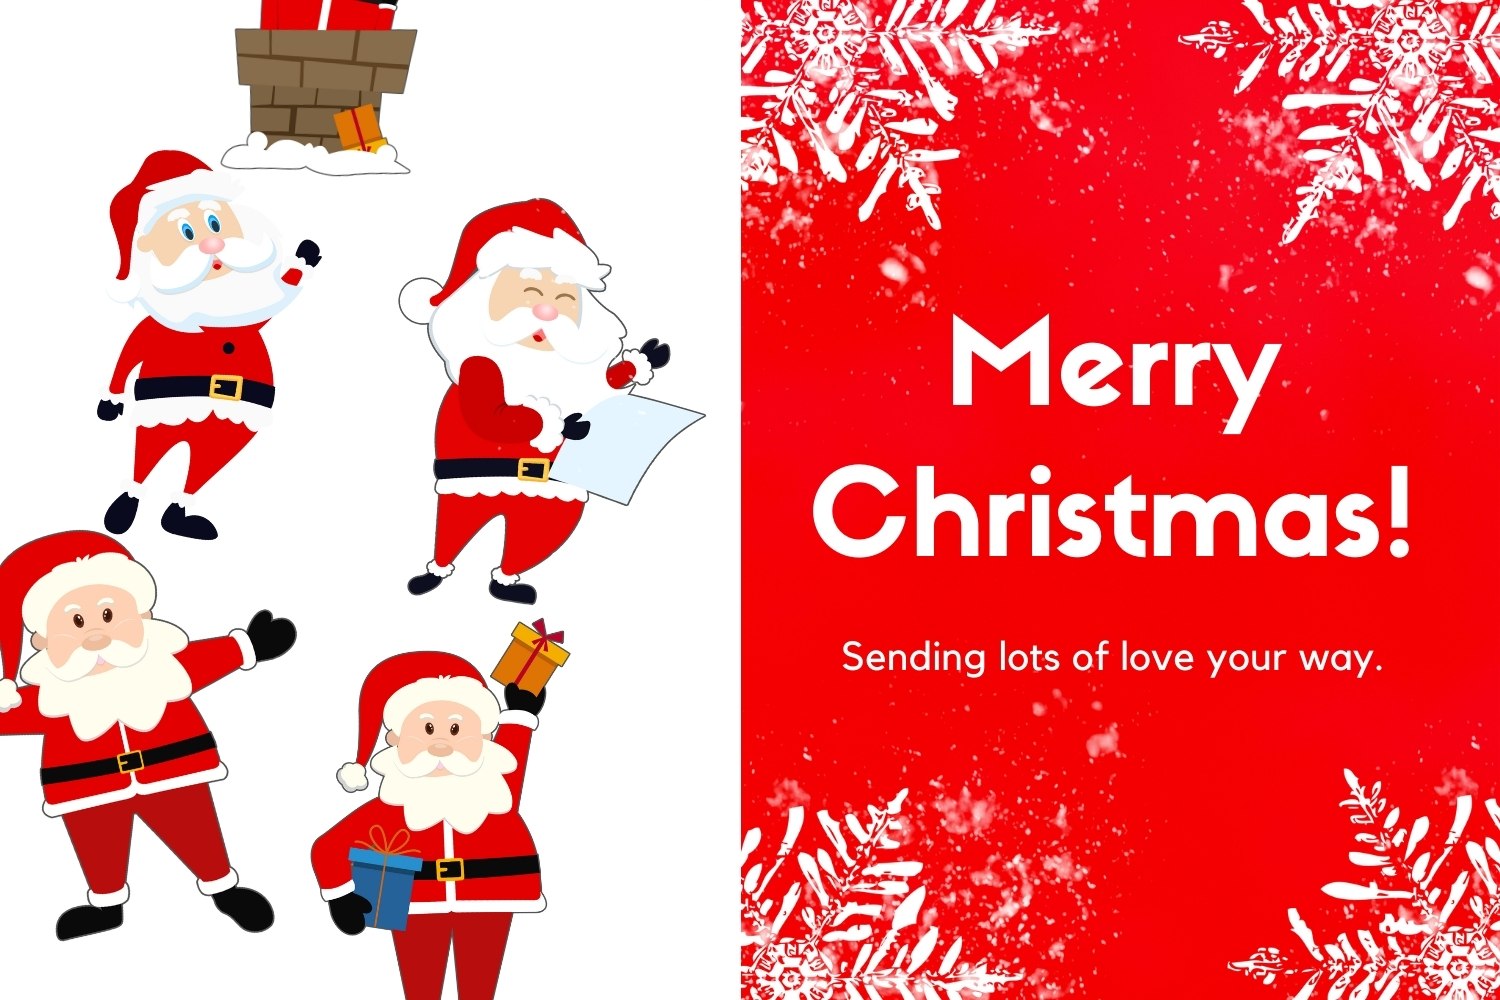 Merry Christmas Santa Claus Red Bundle Clipart image.